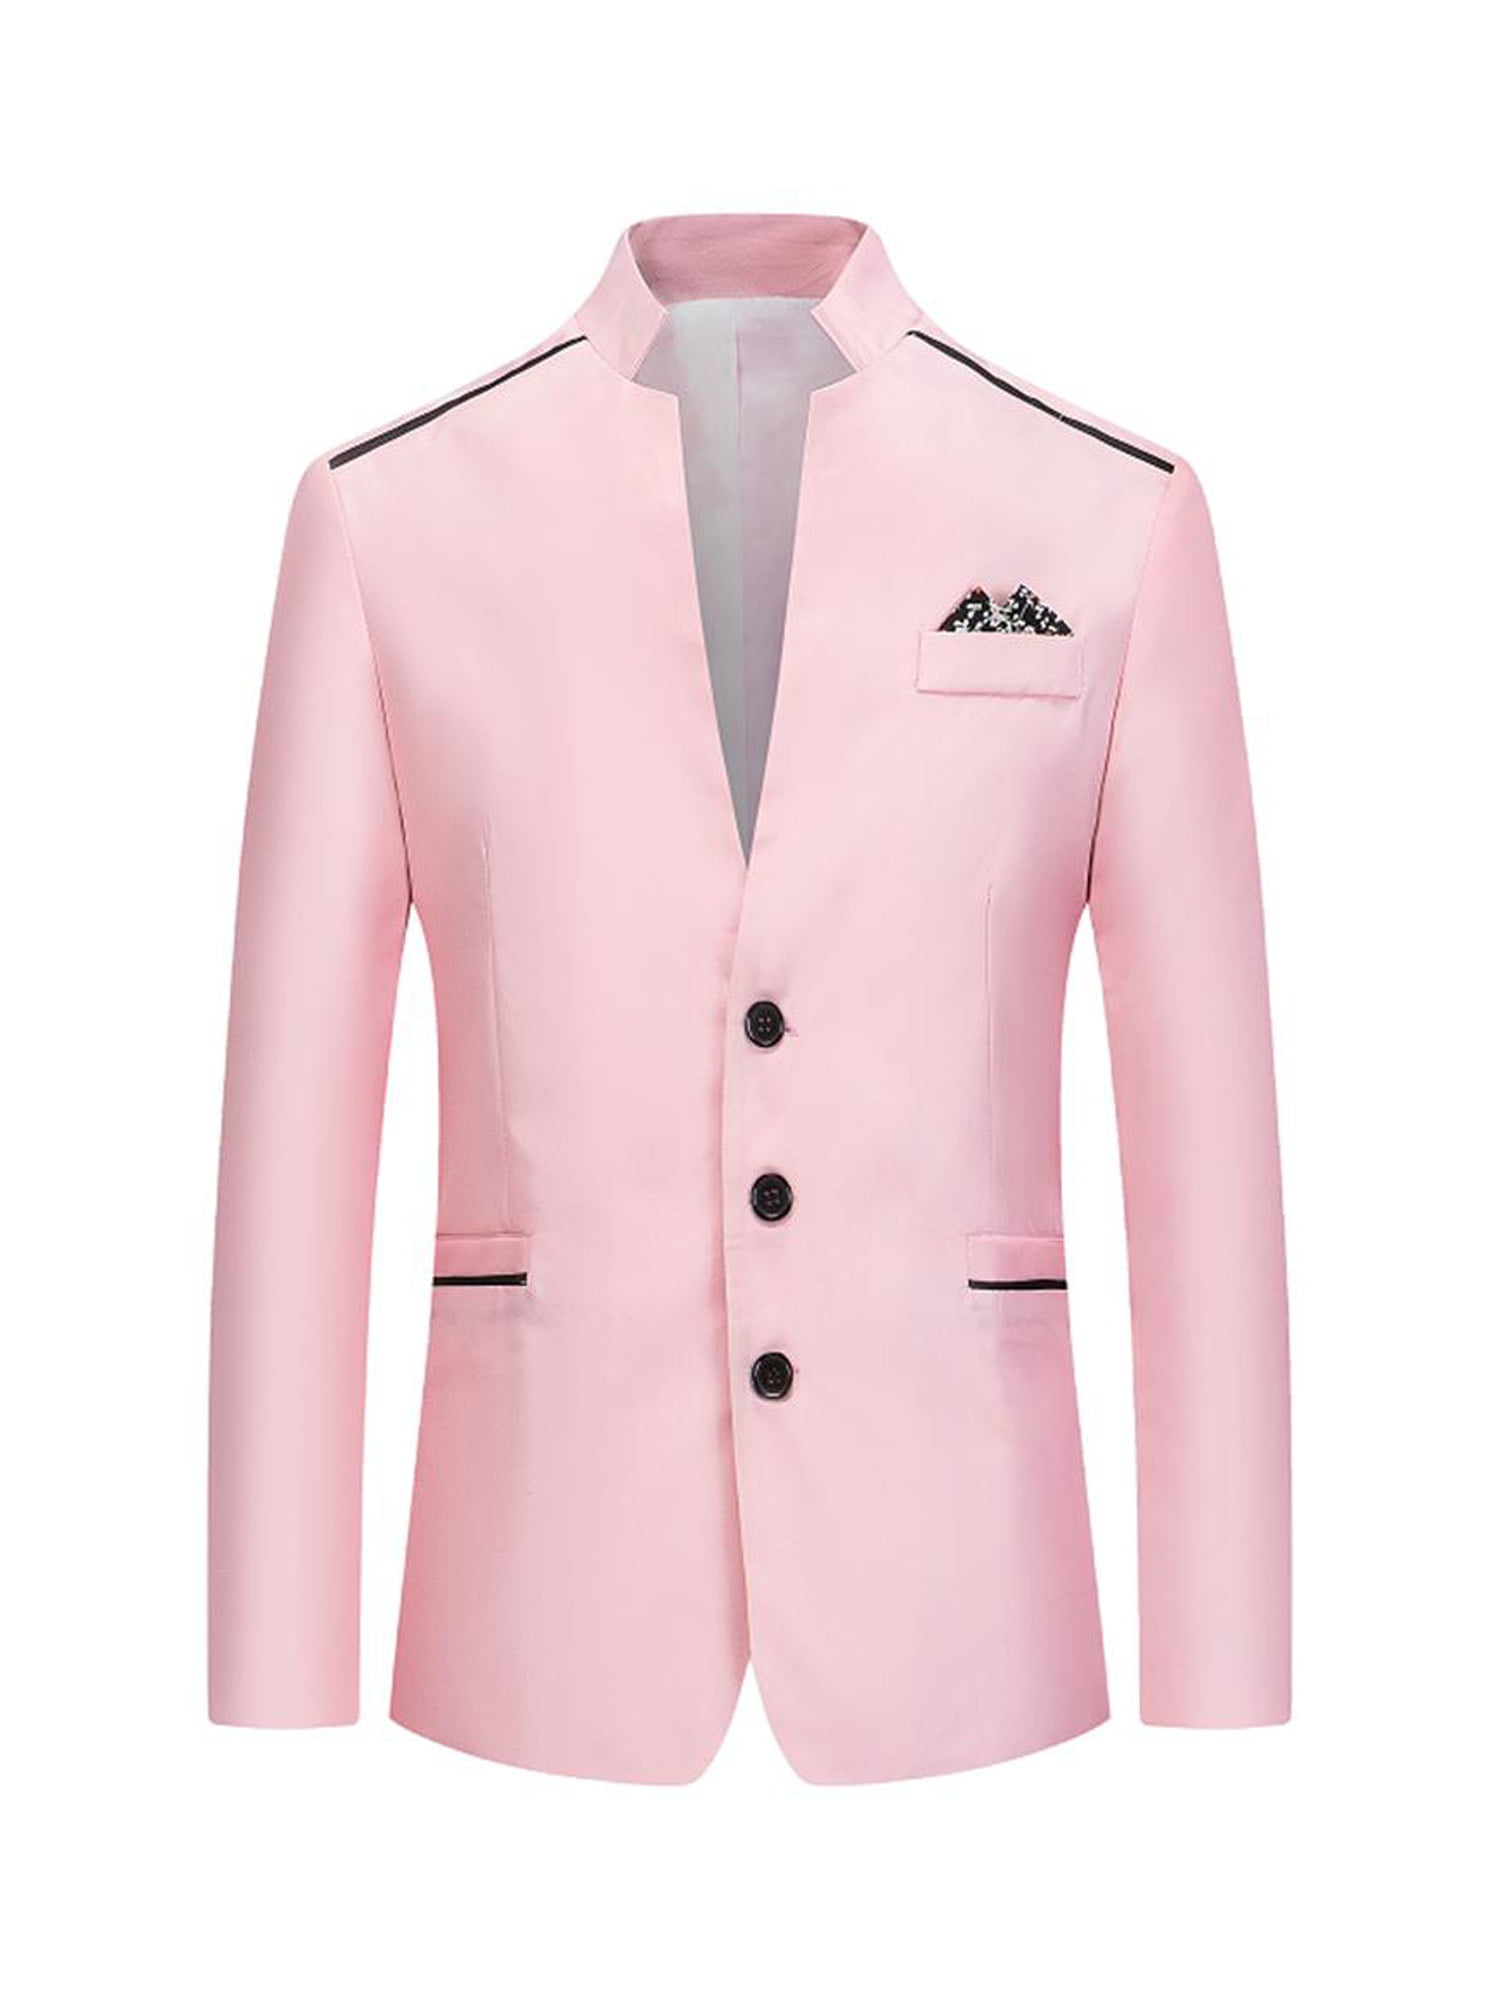 COOFANDY Mens Blazers Slim Fit Stylish Casual Notched Lapel Suit Coat One Button Suit Jacket